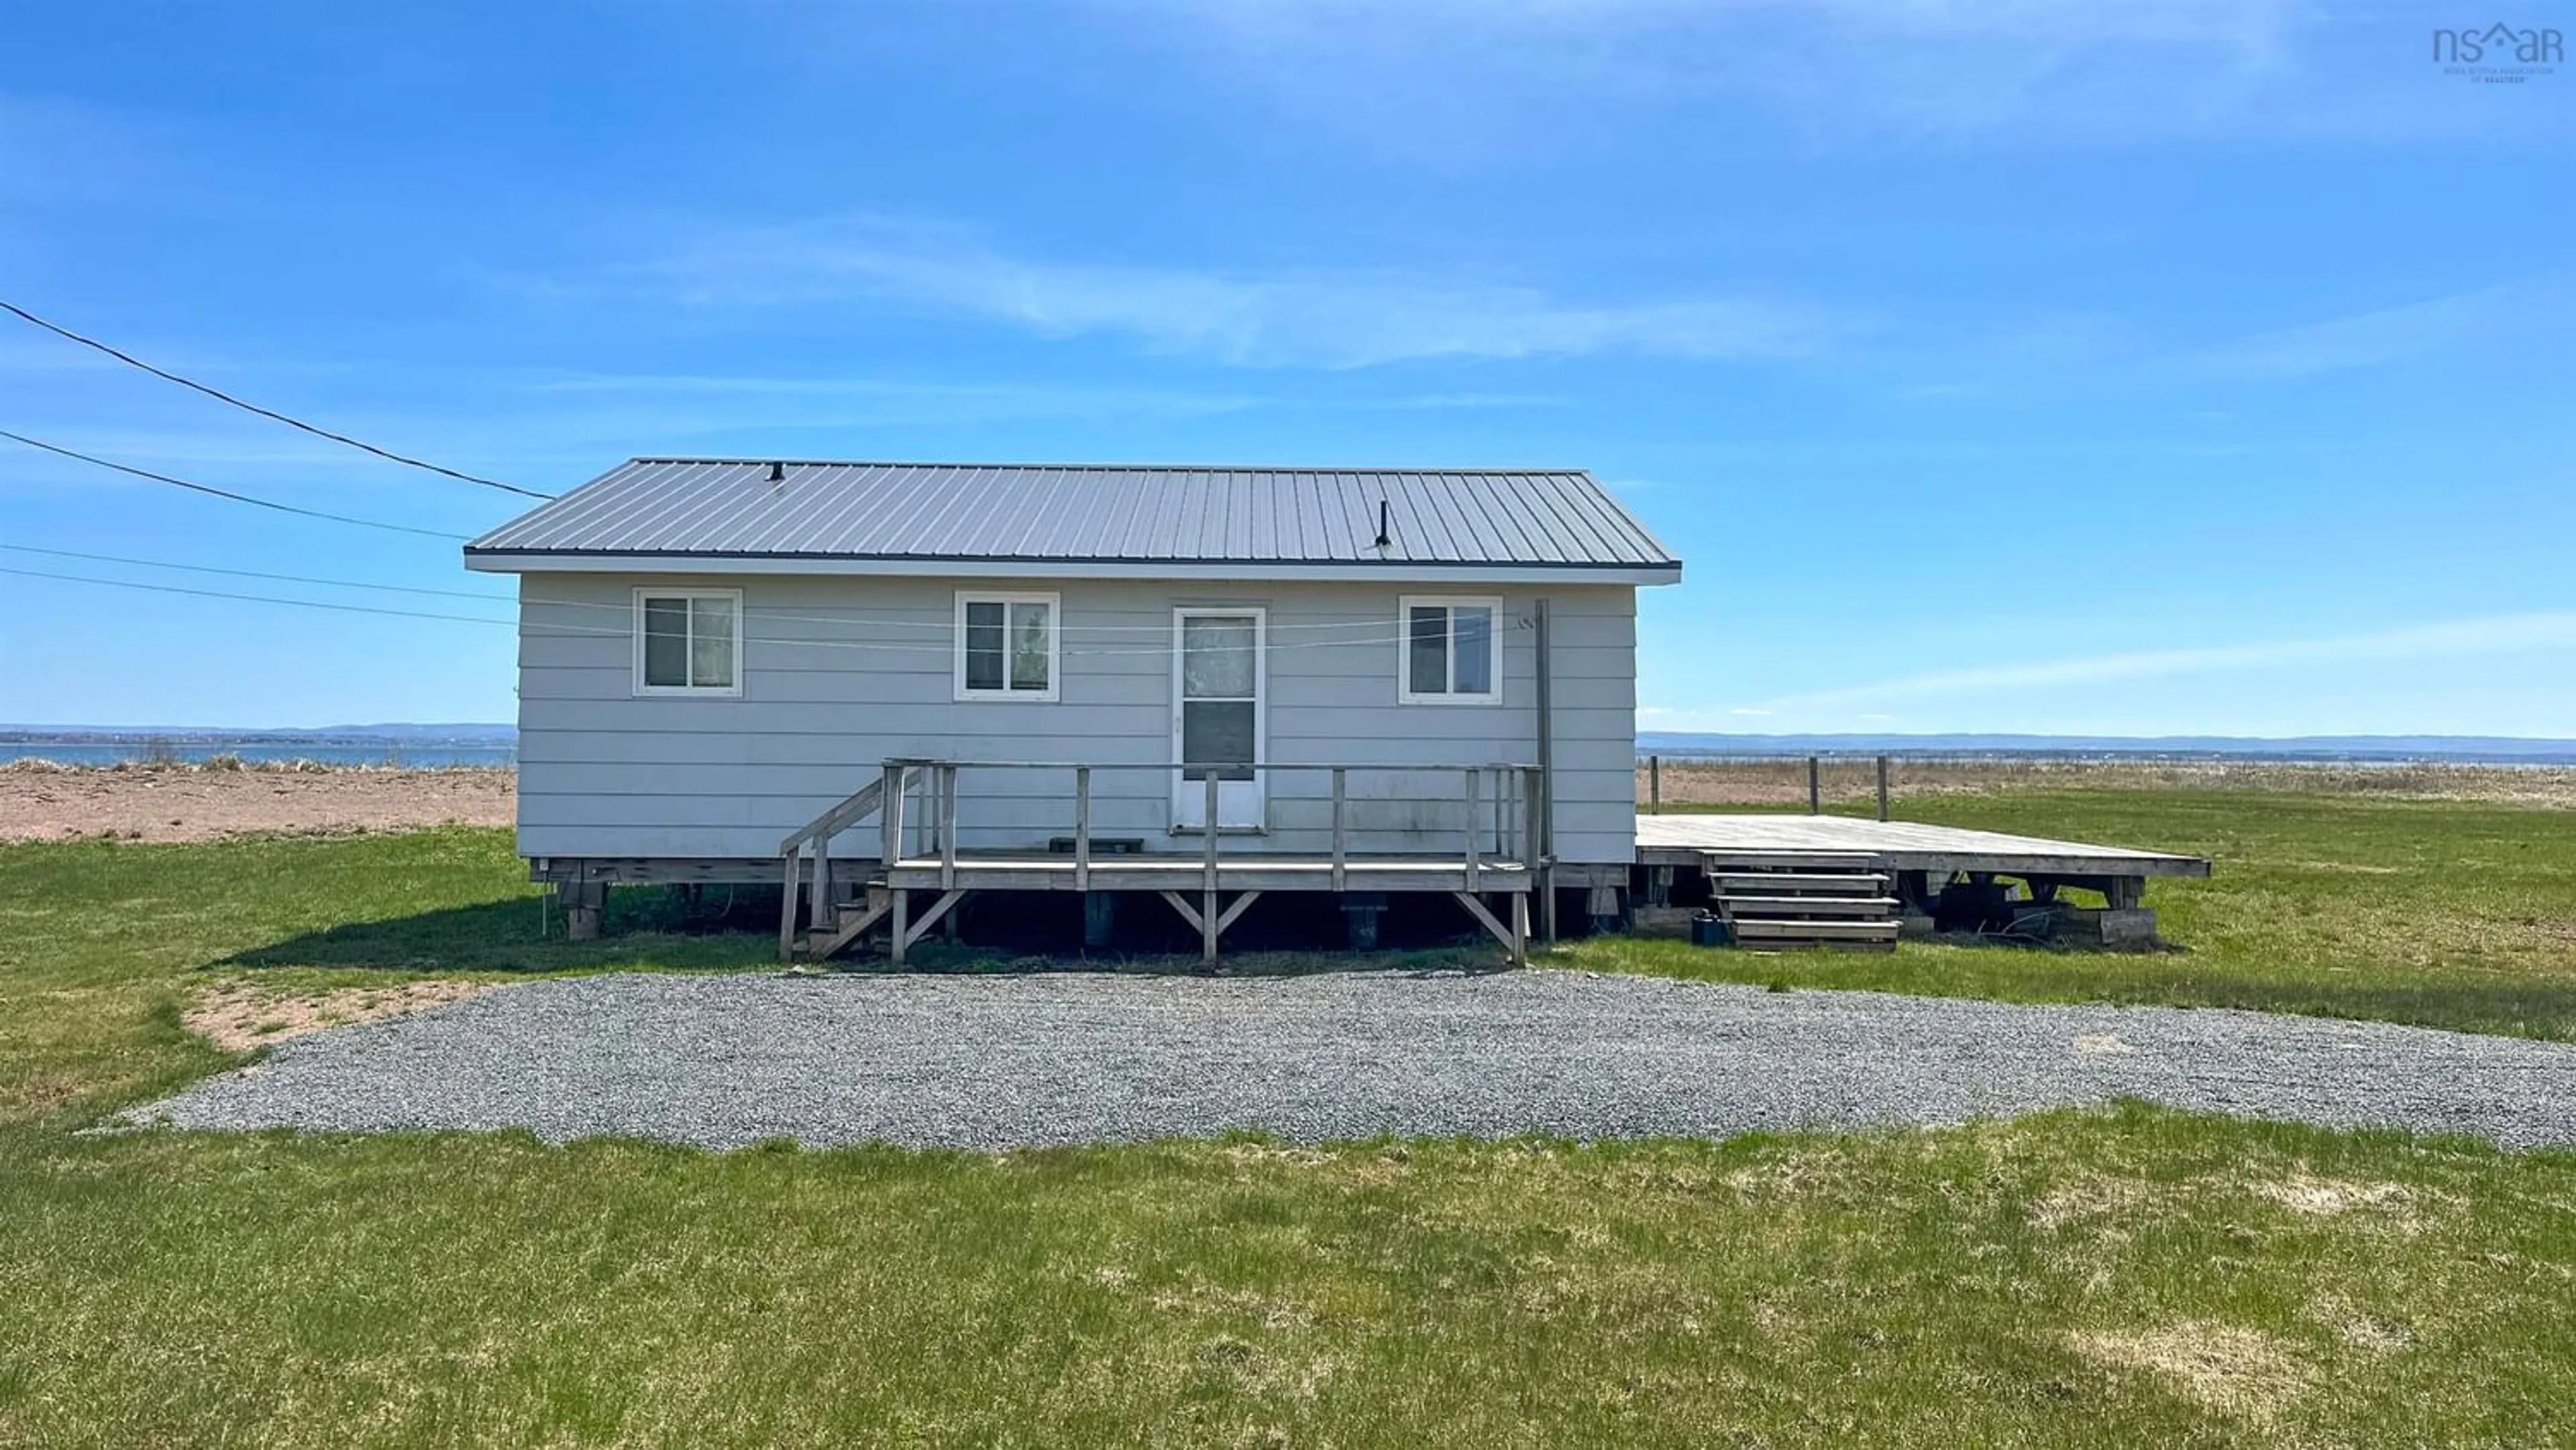 Cottage for 4354 Malagash Rd, Malagash Point Nova Scotia B0K 1E0